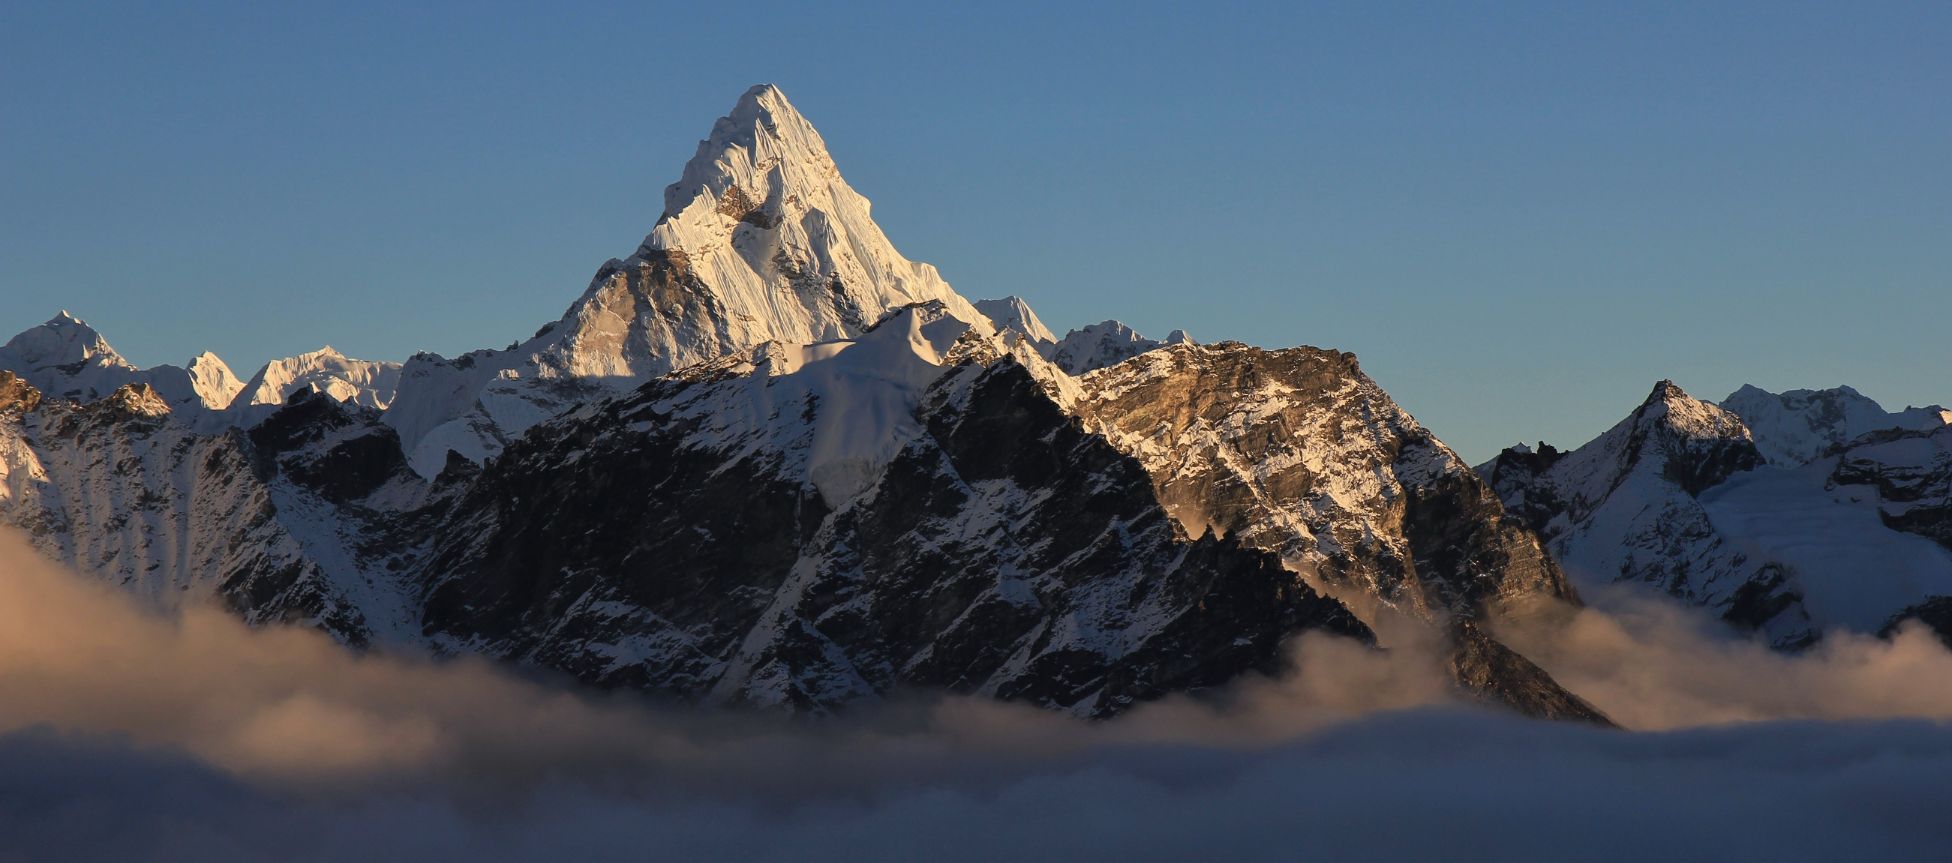 Mount Ama Dablam from Kala Patthar, Everest National Park, Nepal, Asia